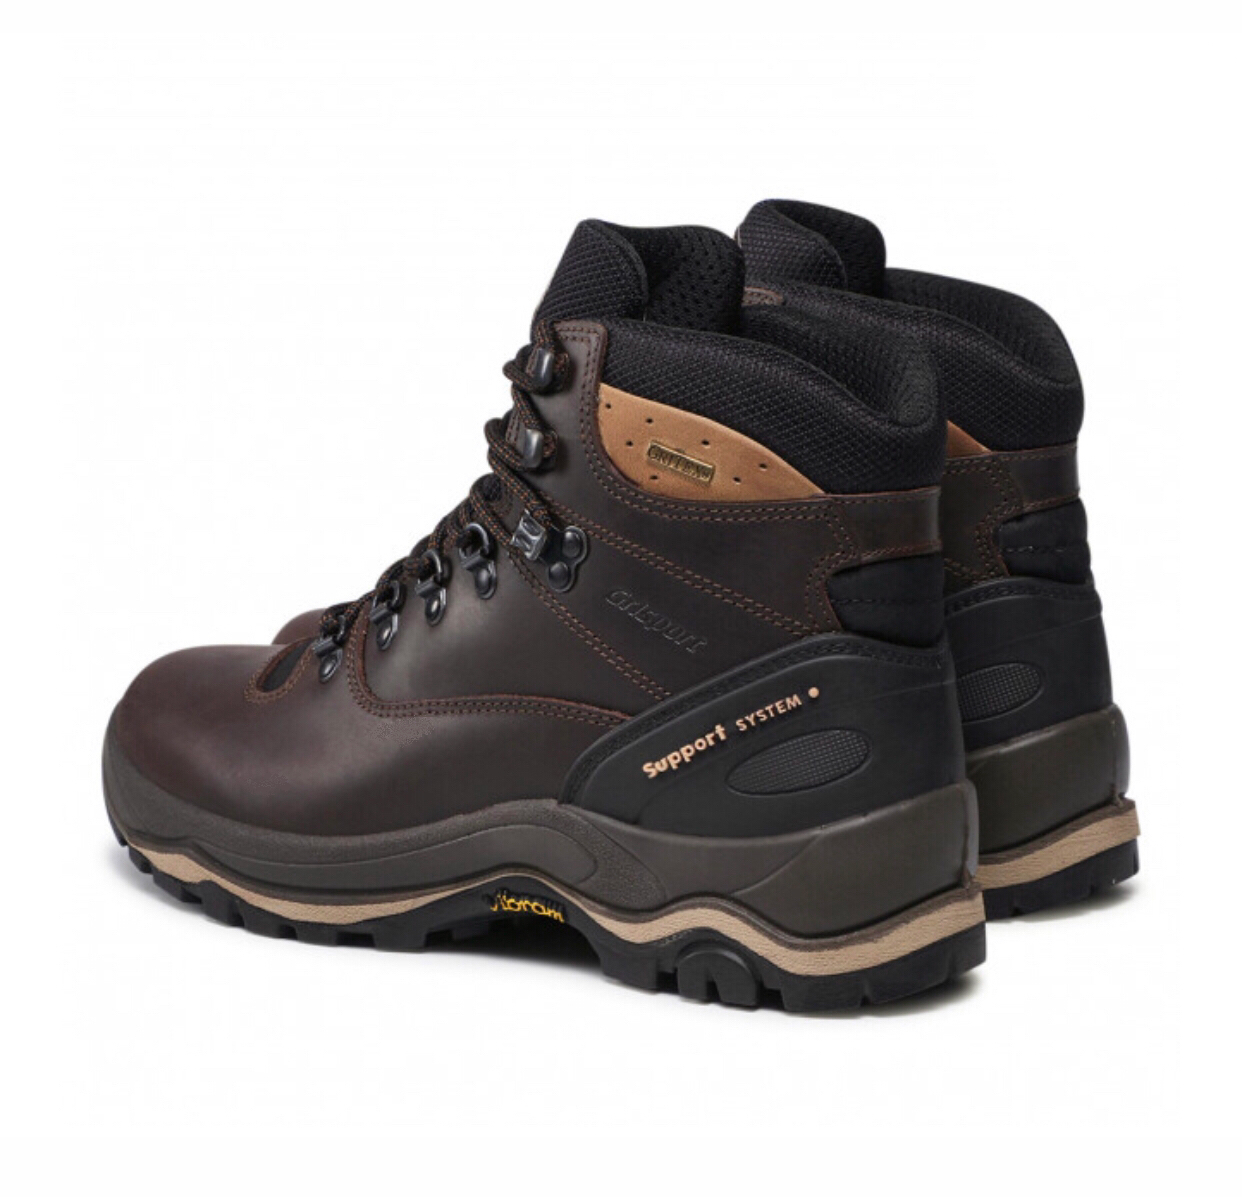 Shoes Canberra 7 Grisport Marrone – Hiking Waterproof Trekking 11205D15G Eyelet B Dakar Redpath